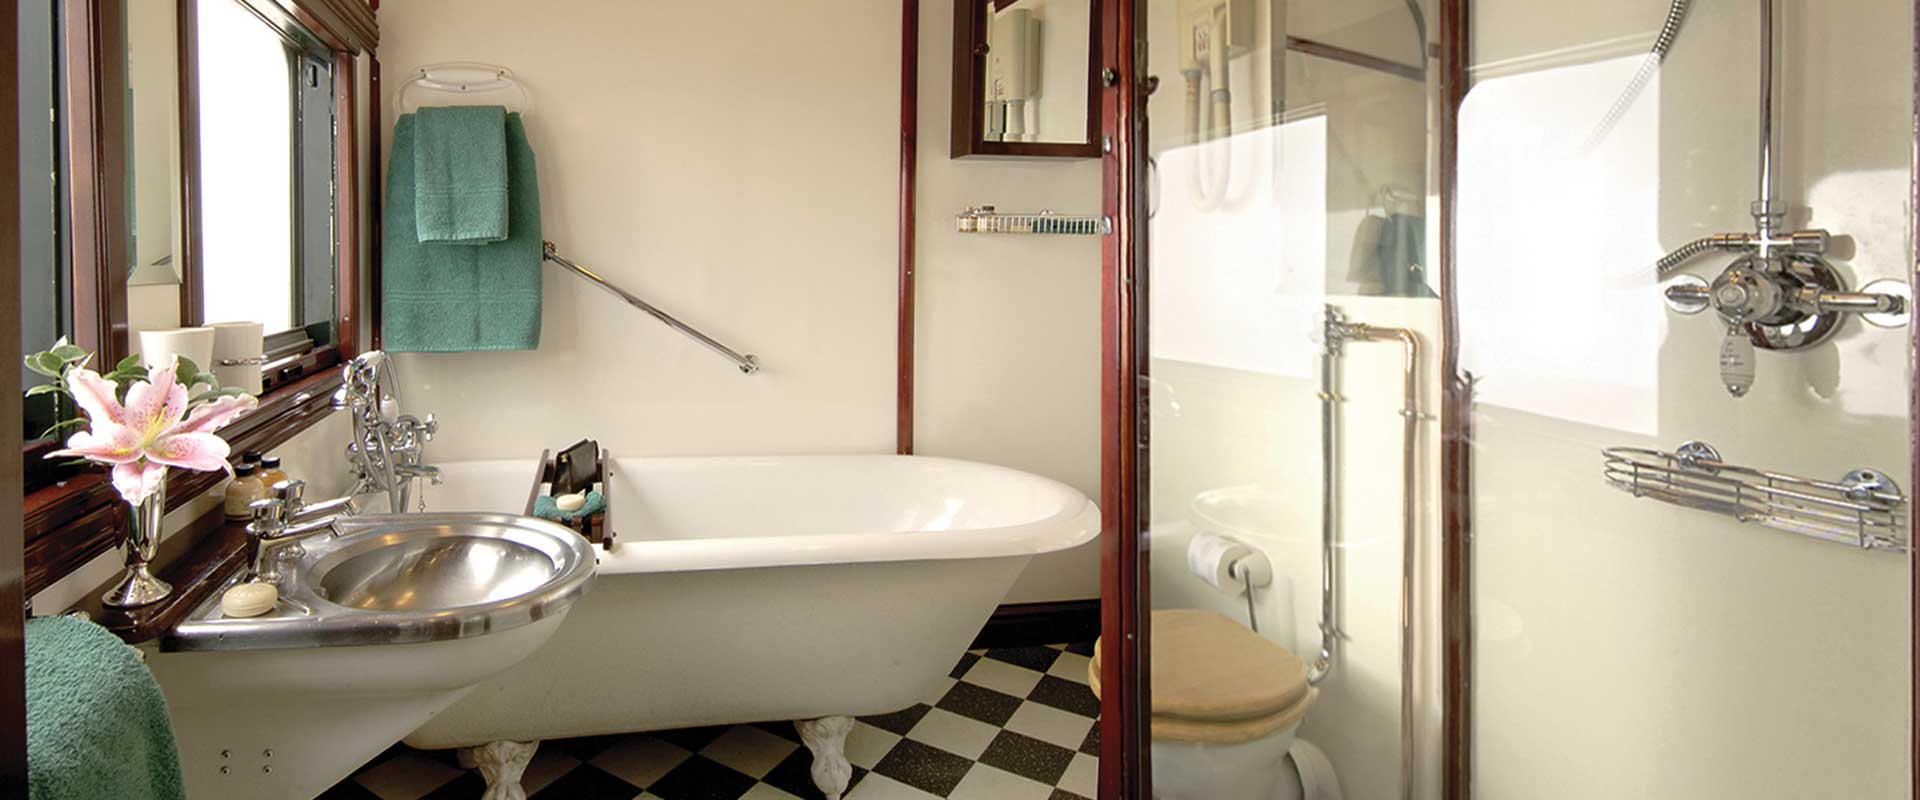 interior of royal suite bathroom on rovos rail train, africa